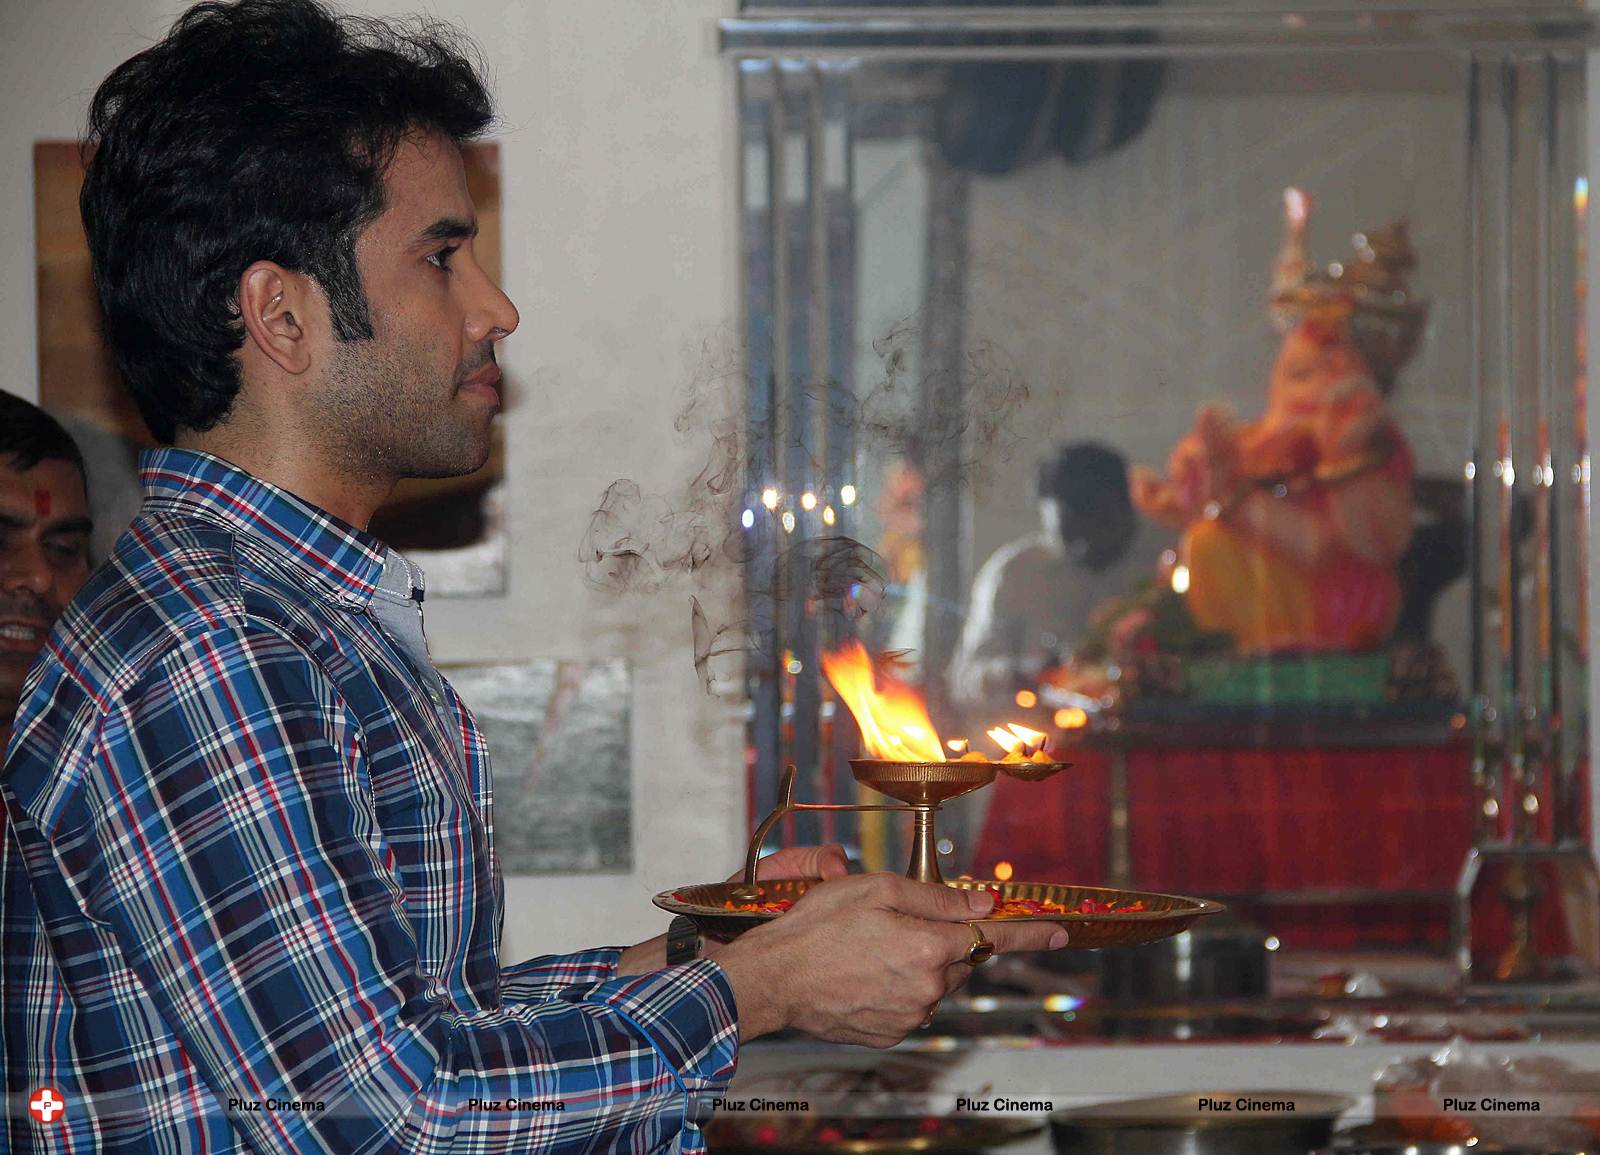 Tusshar Kapoor - Bollywood stars visit Ganesh mandals Photos | Picture 571104